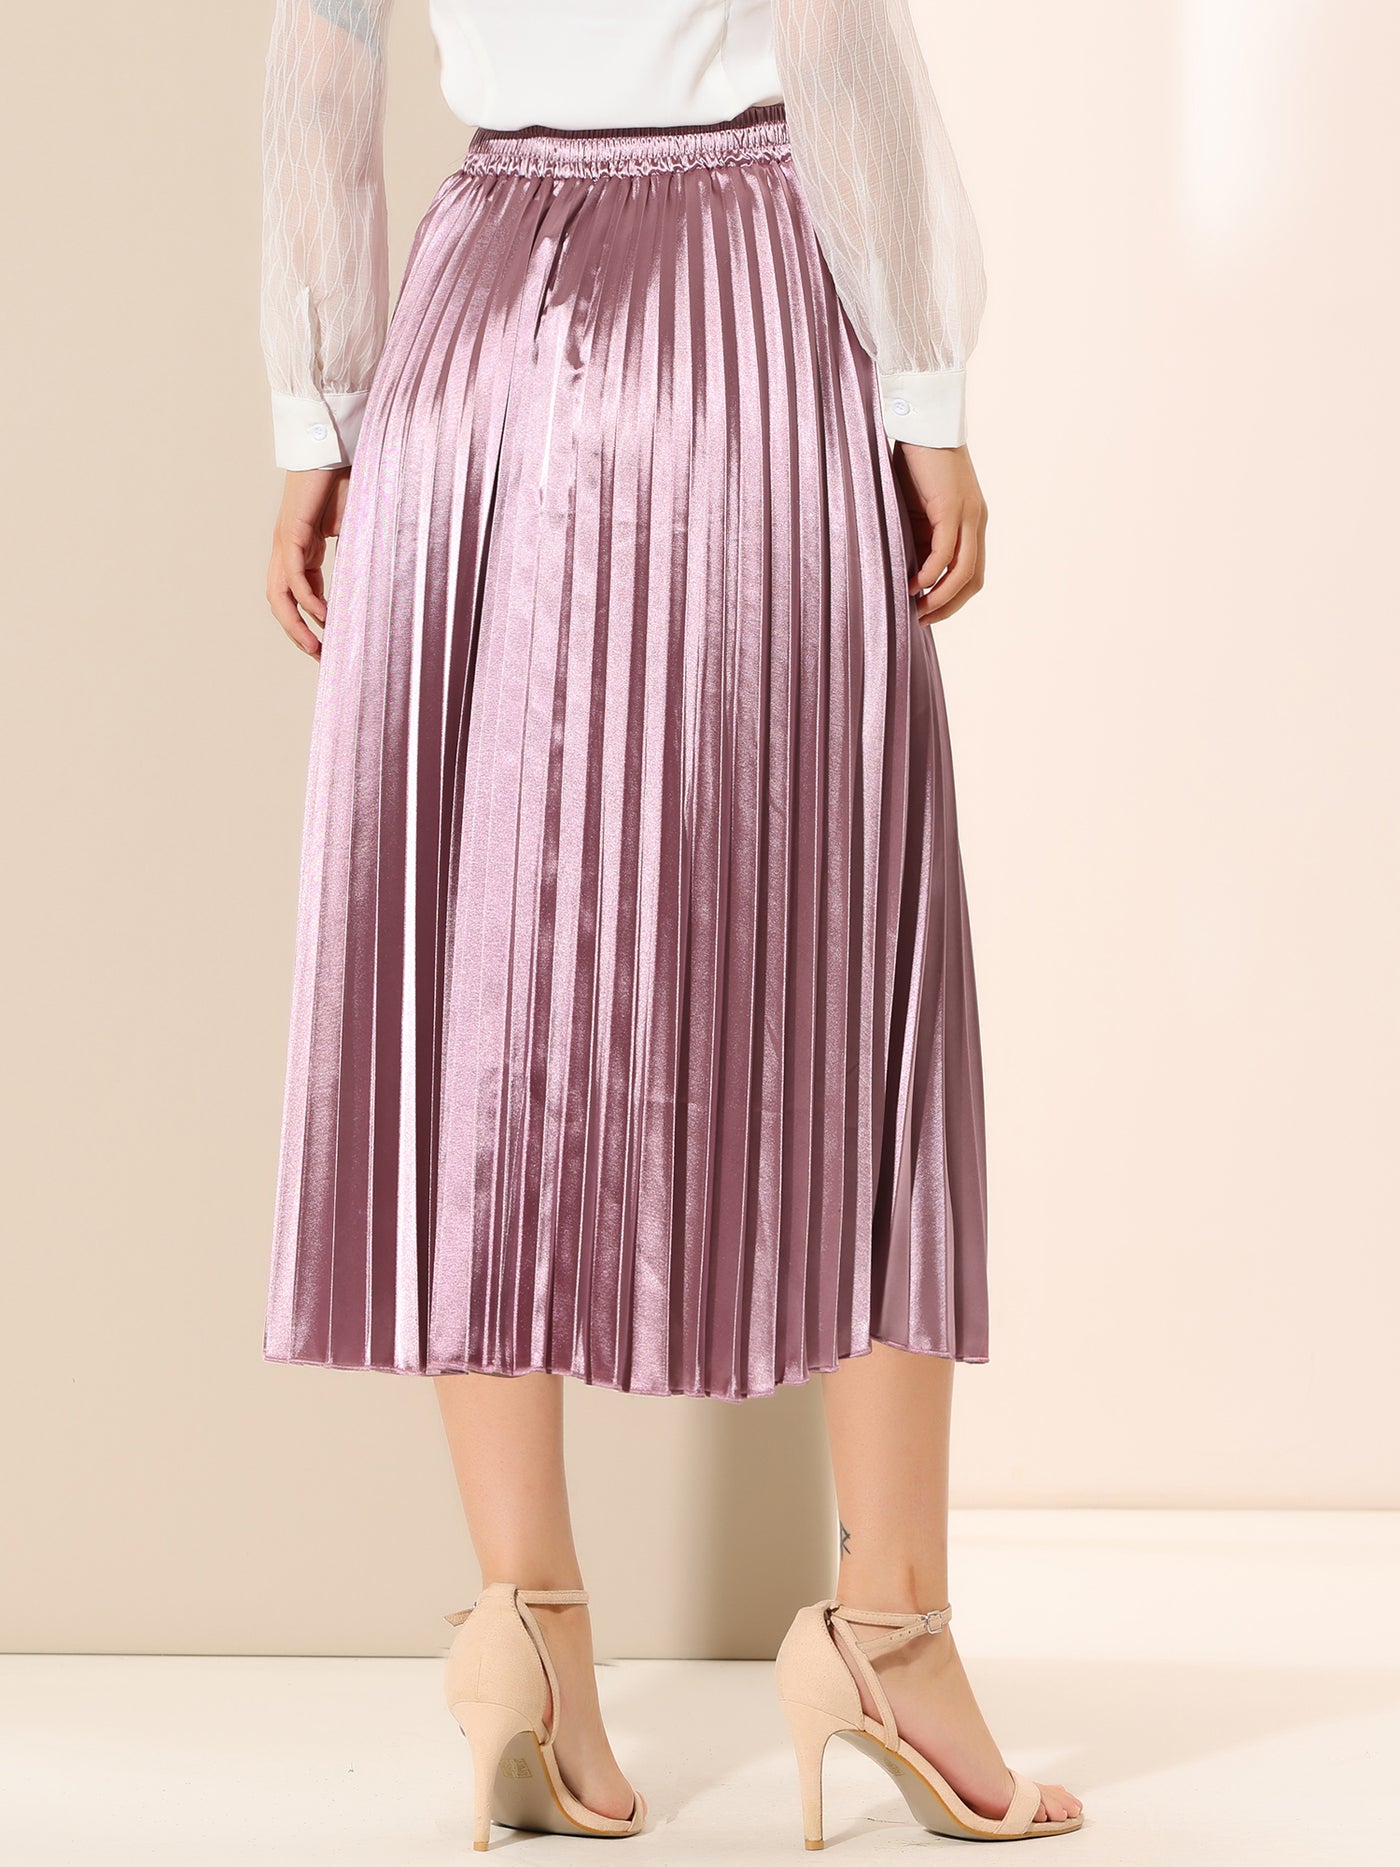 Allegra K Party Elastic Waist Metallic Shiny Pleated Midi Skirt